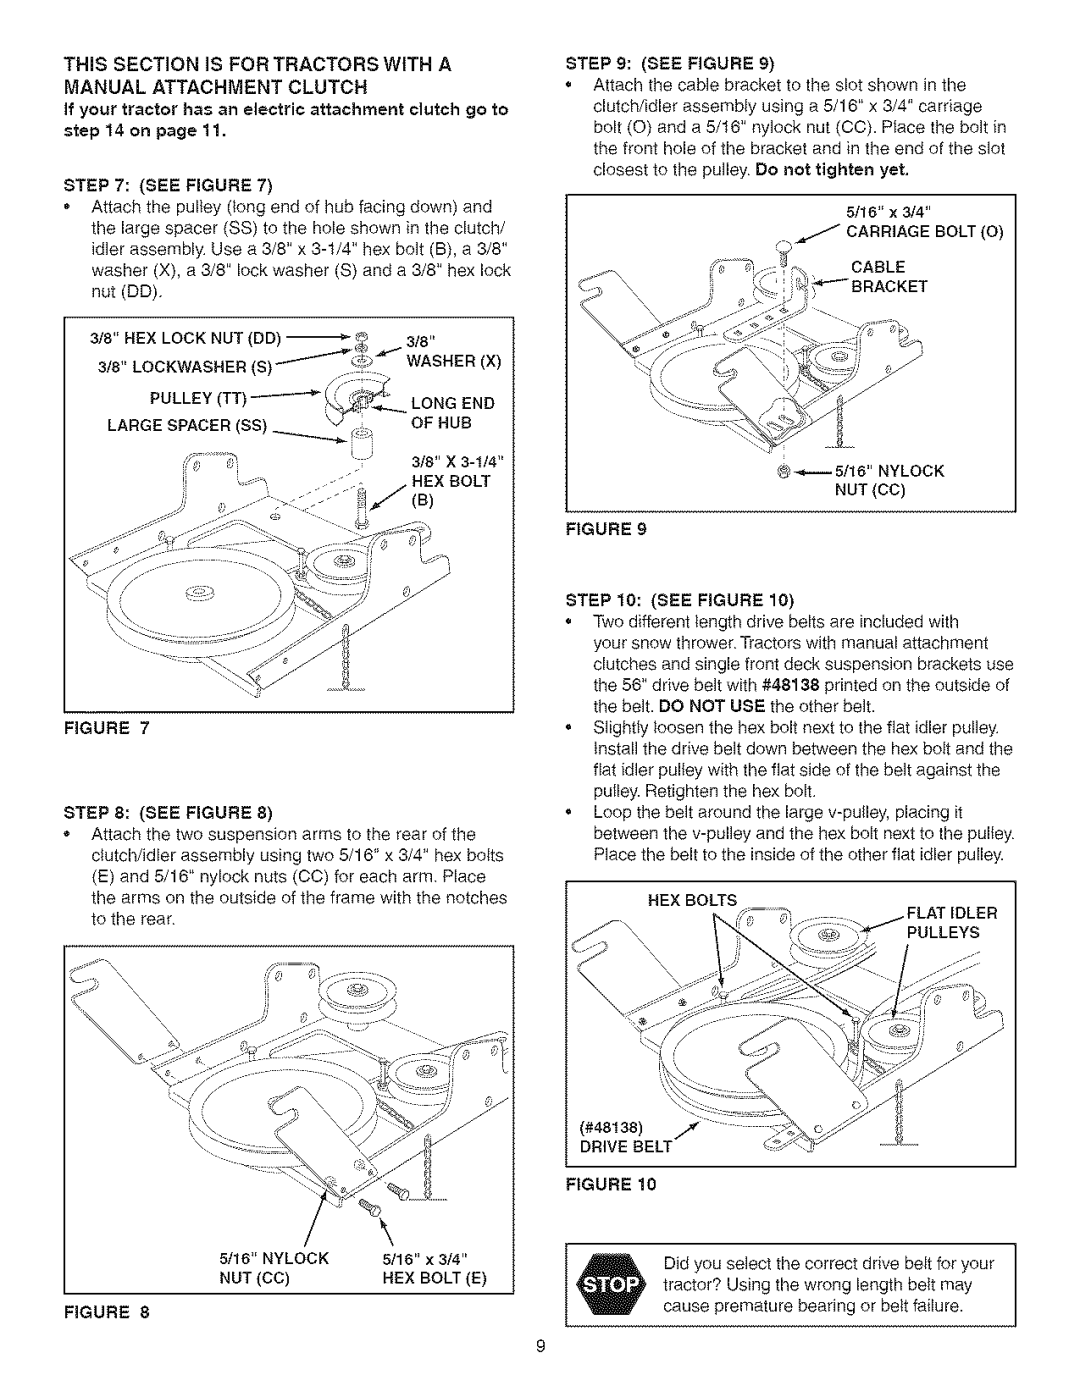 Craftsman 486.24838 manual i/IB, Manual Attachment Clutch, See Figure, 5/16 x 3/4 